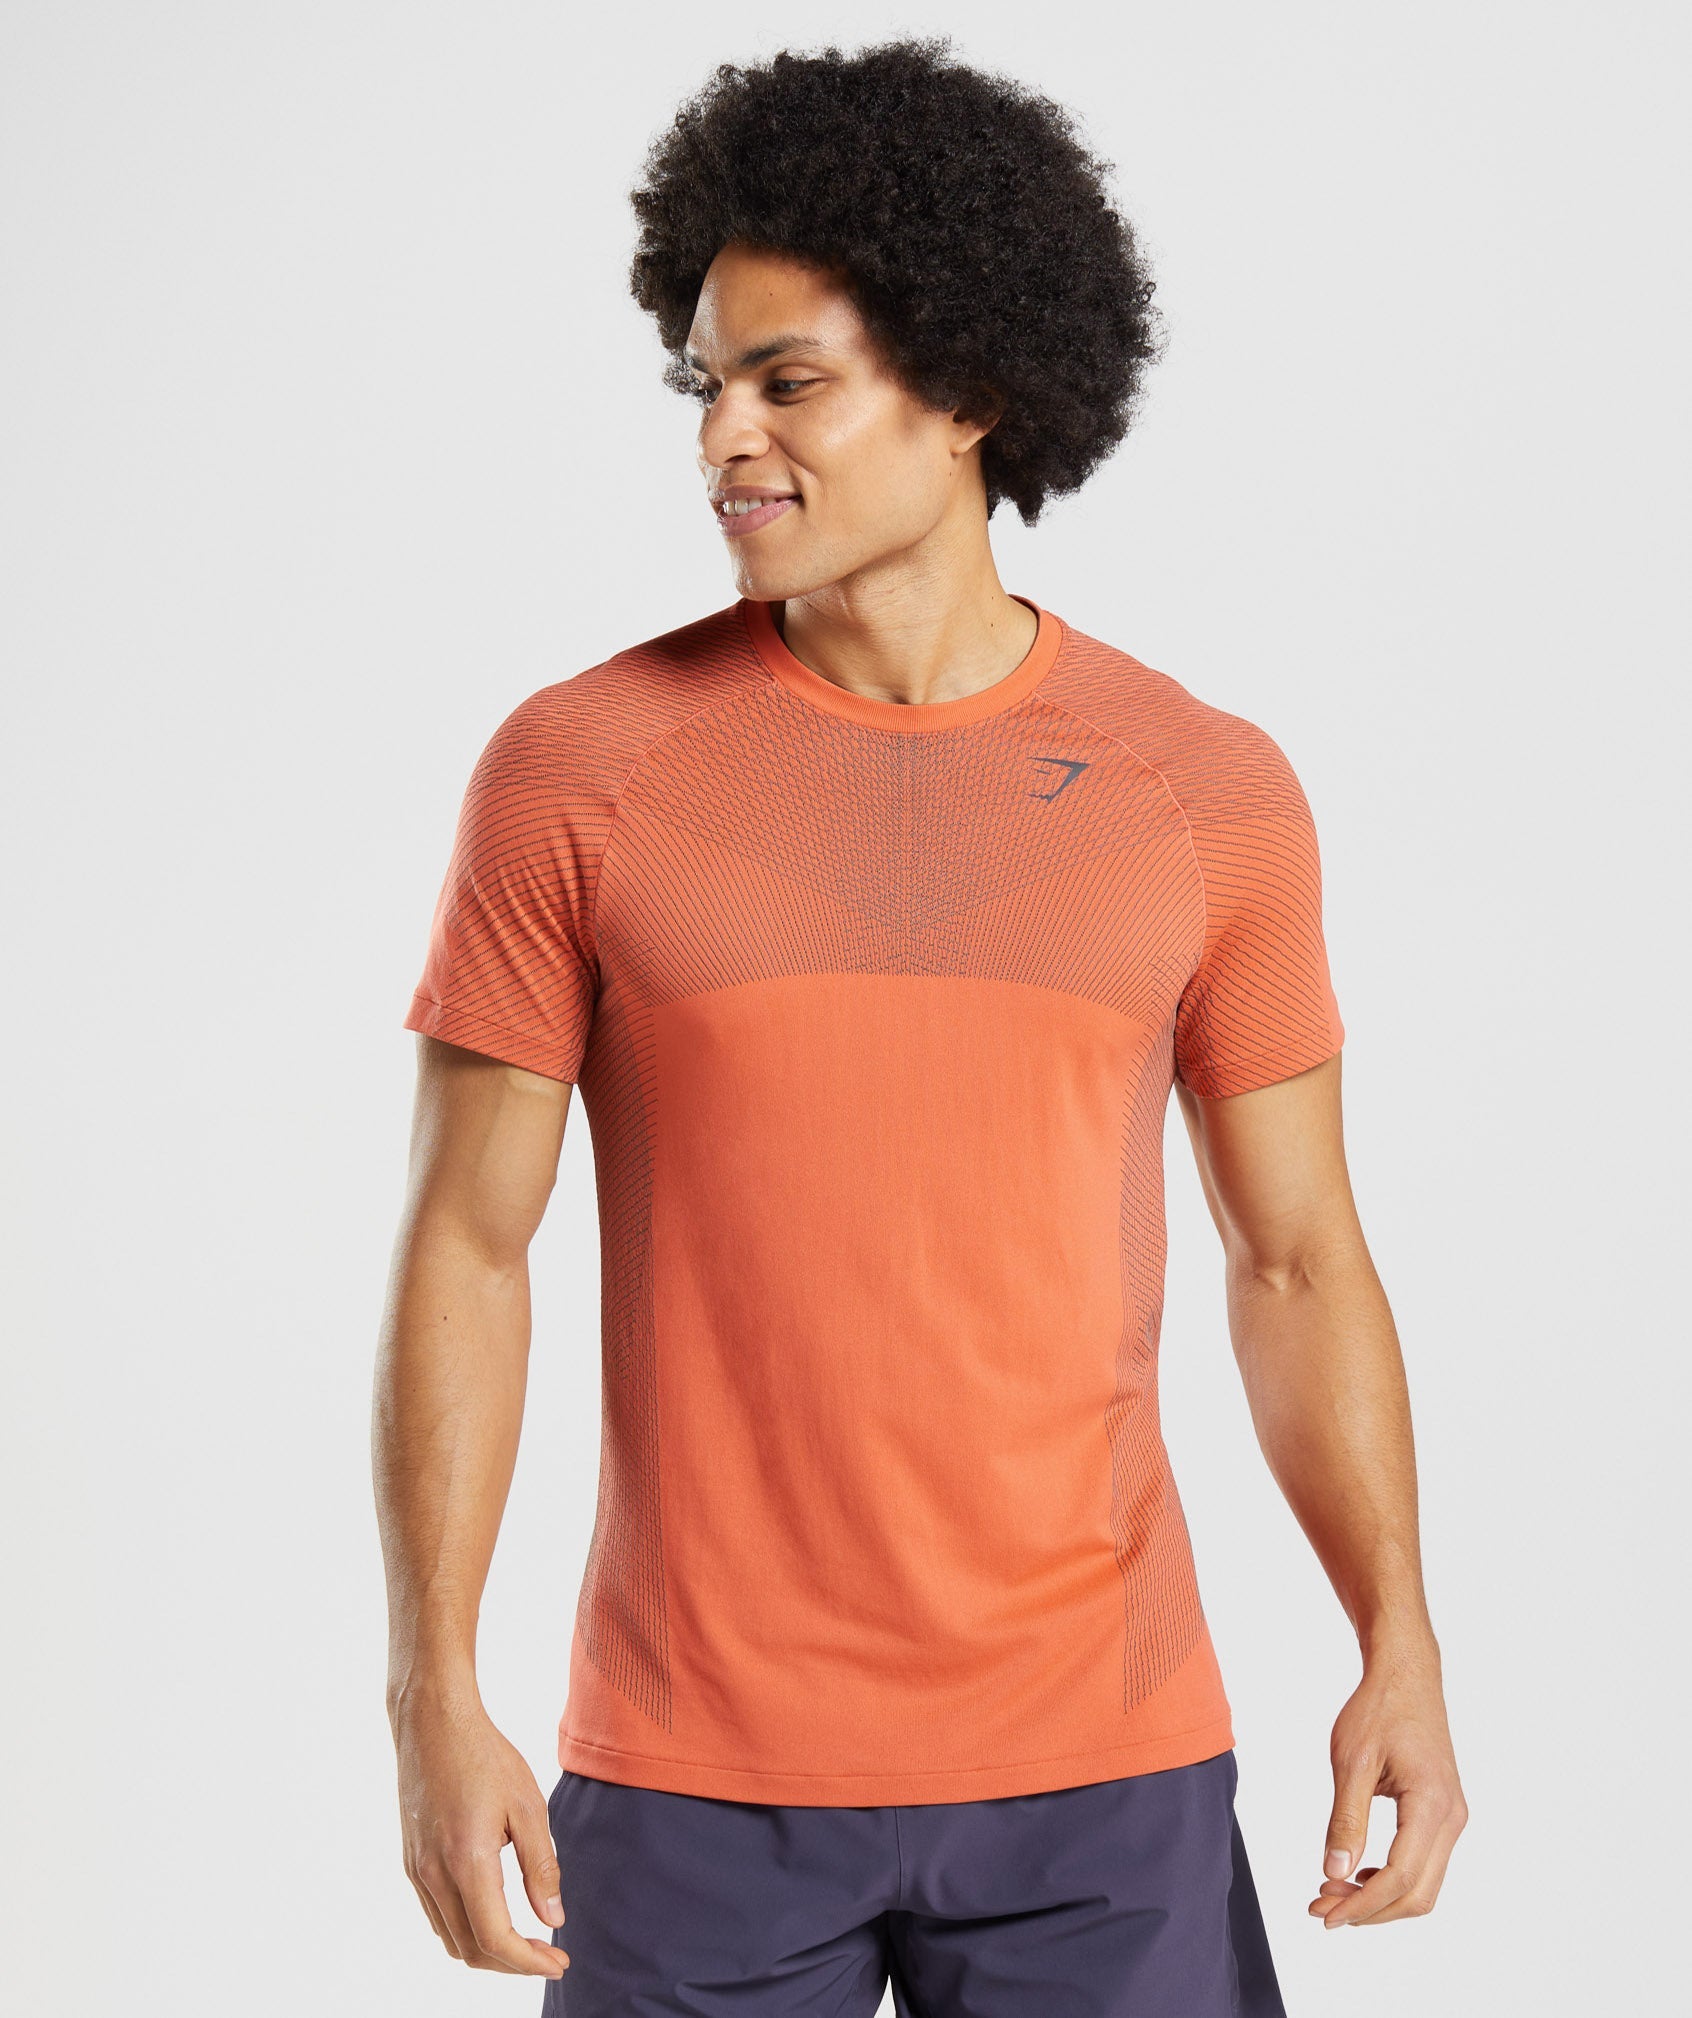 Apex Seamless T-Shirt in Papaya Orange/Onyx Grey - view 1